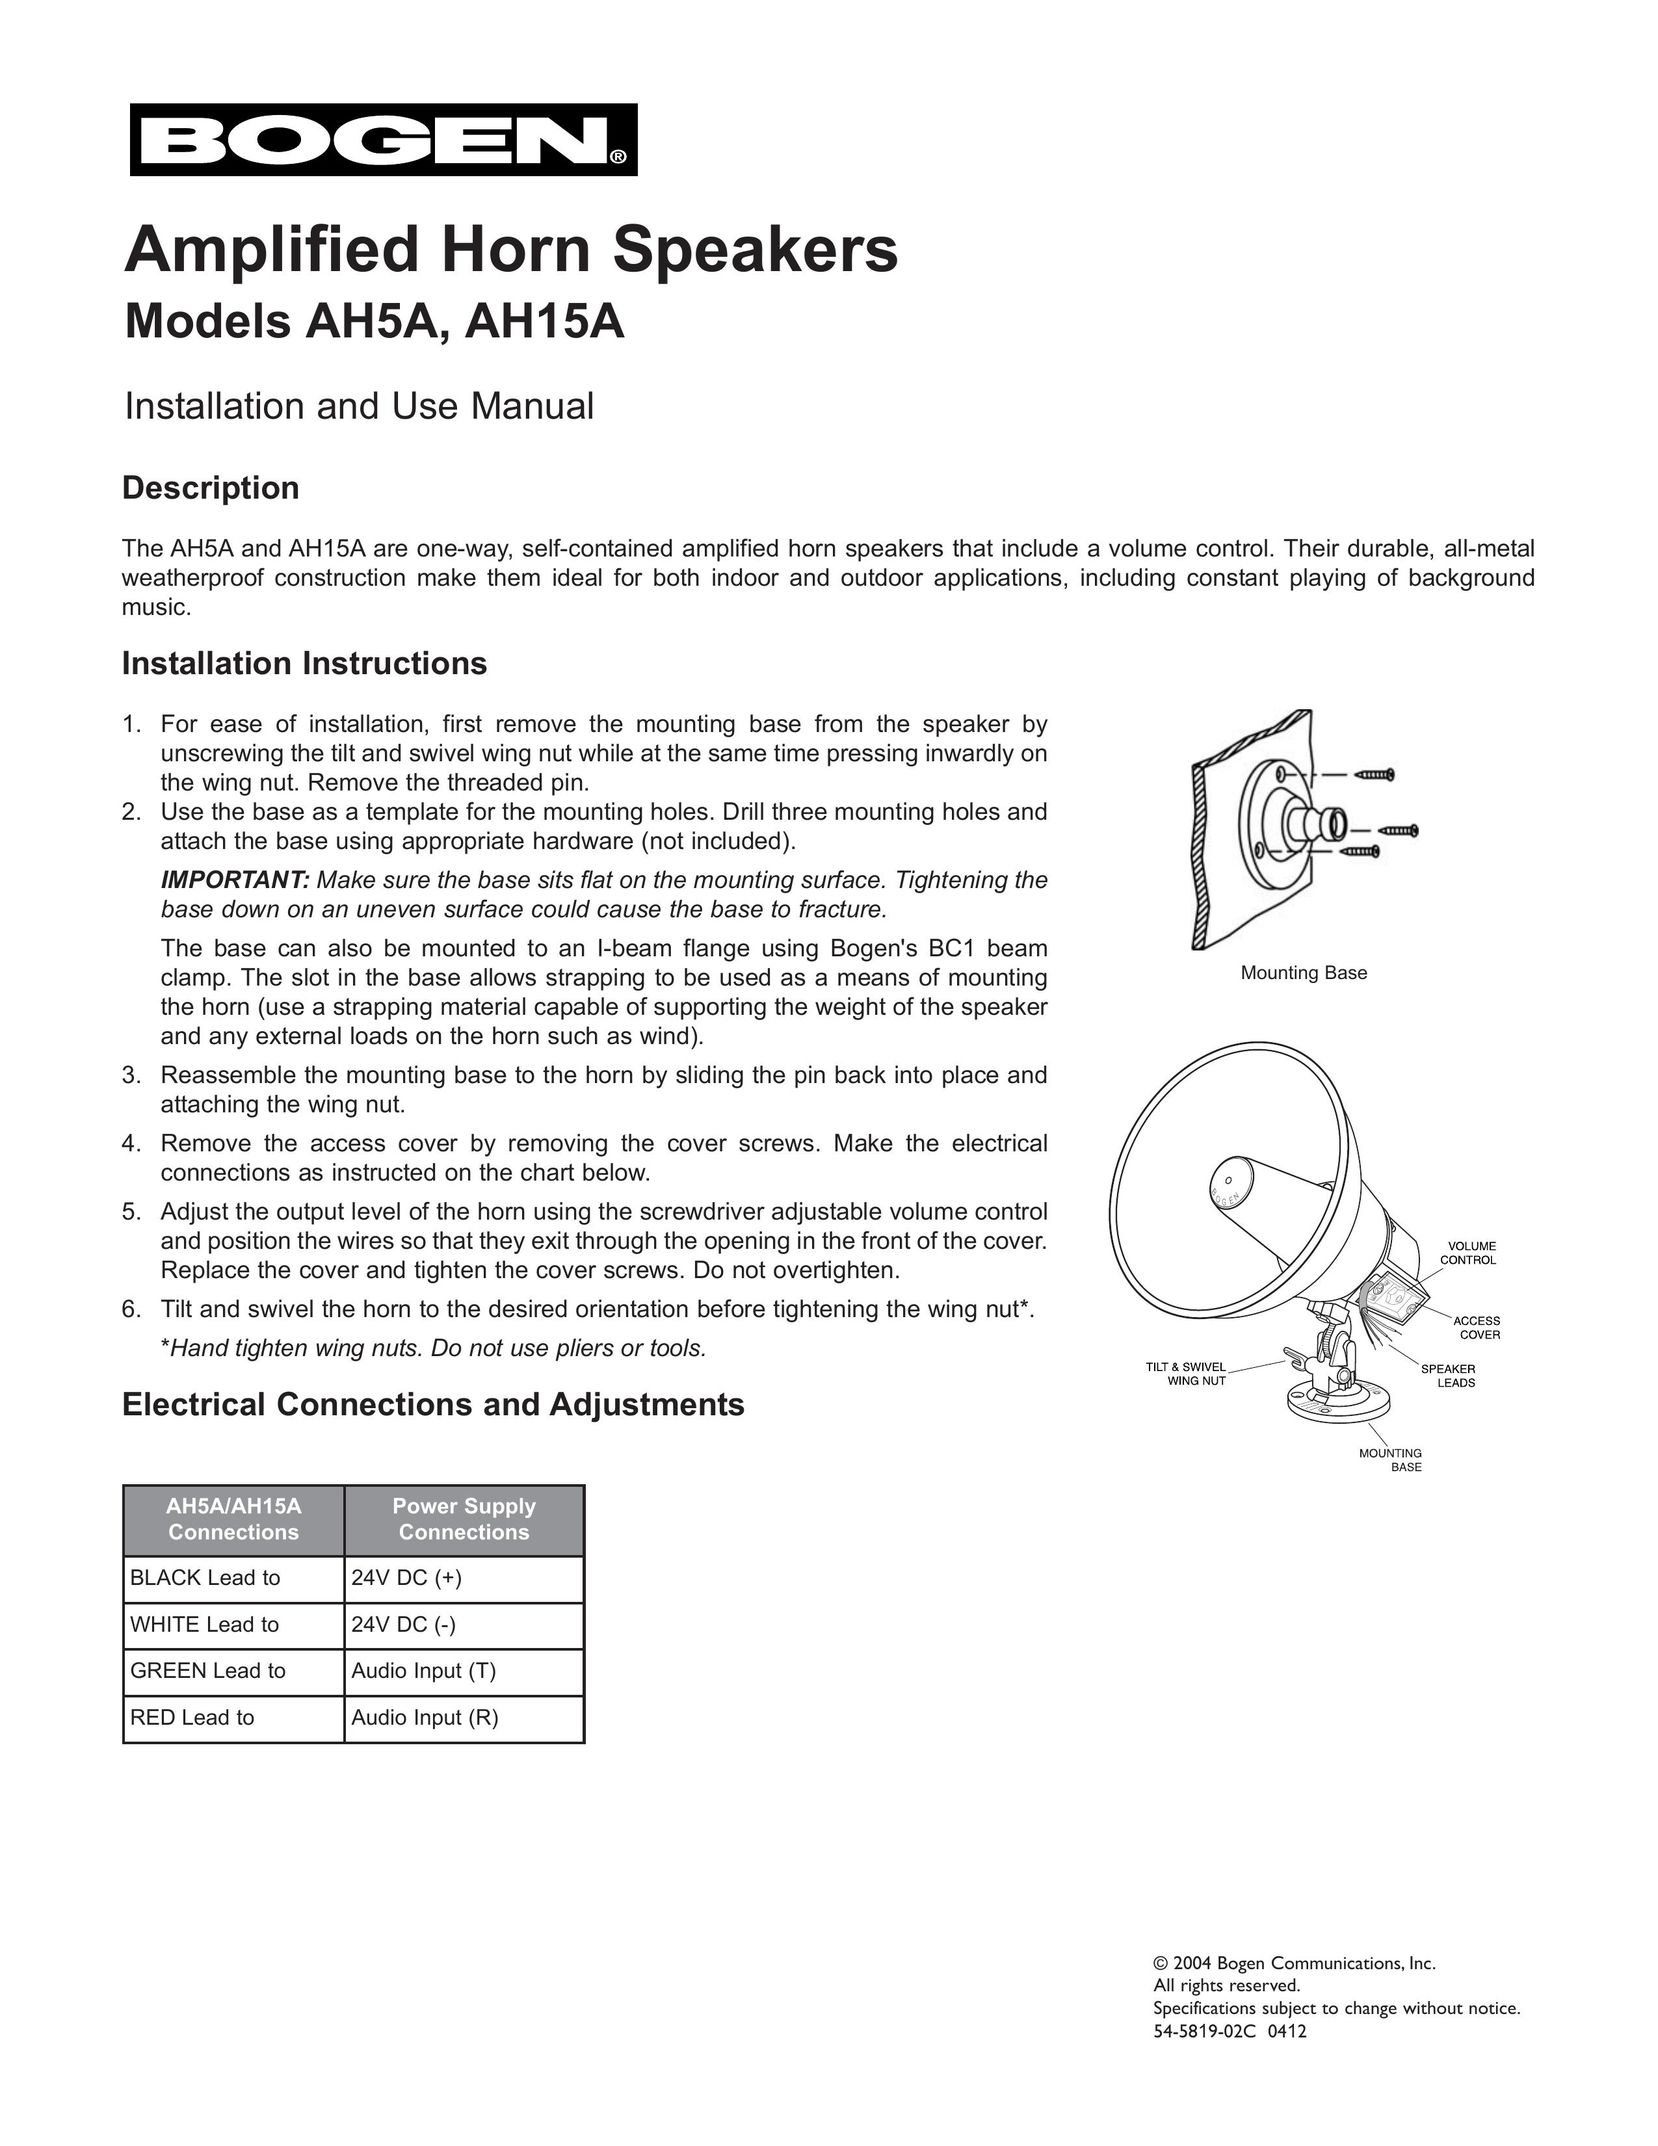 Bogen AH5A Amplified Phone User Manual